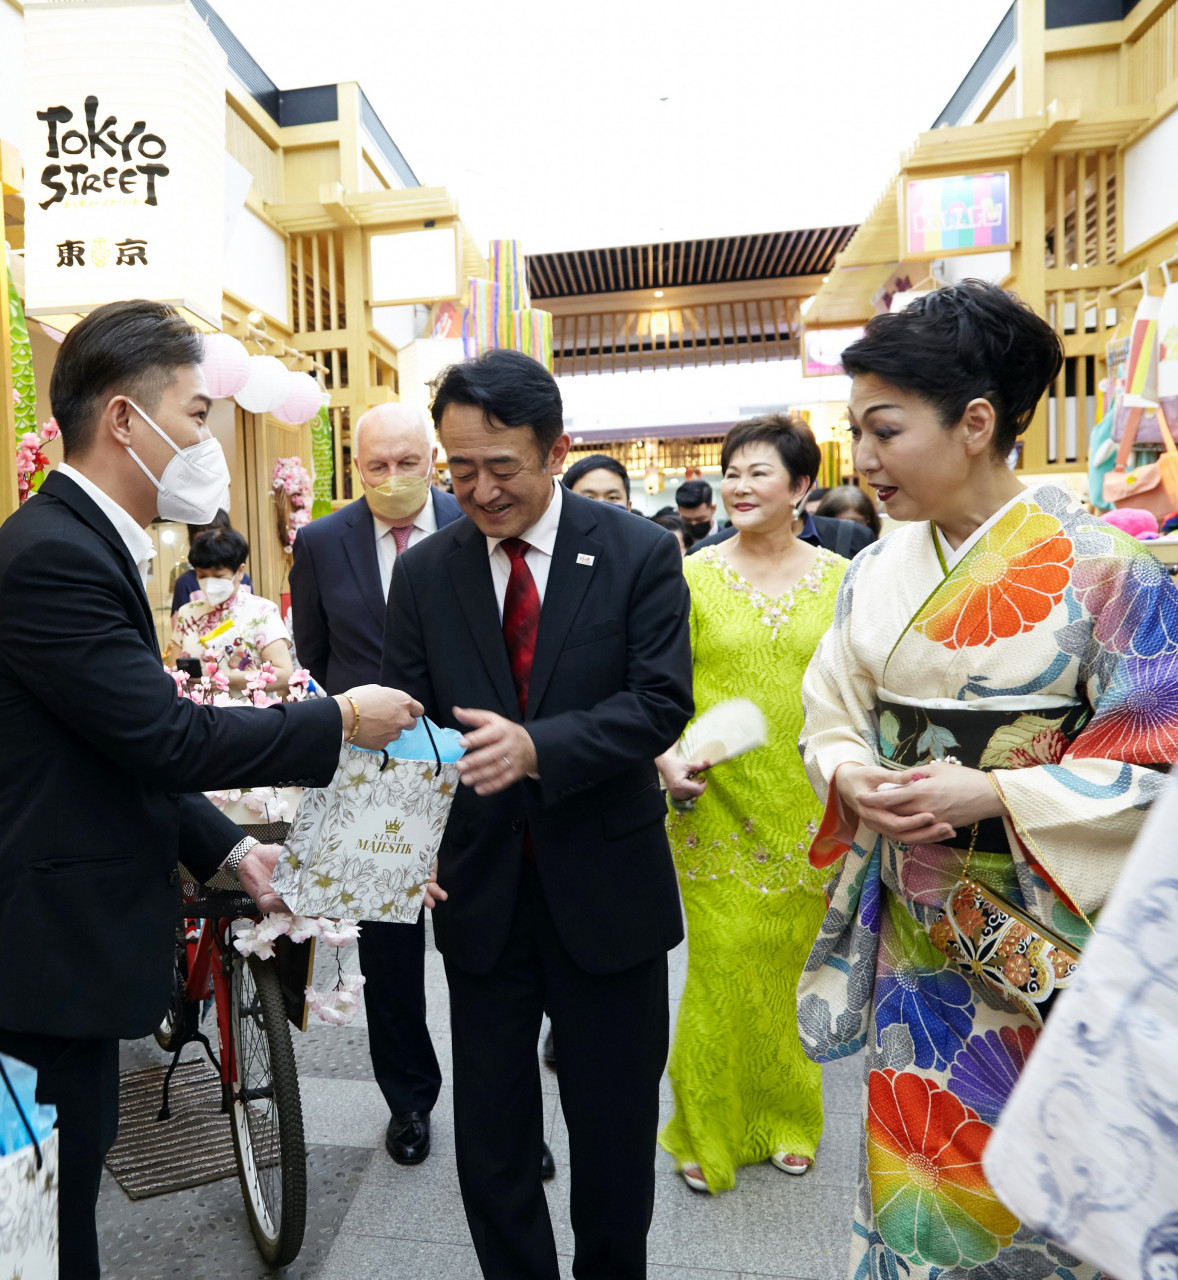 Japan ambassador to Malaysia H.E. Katsuhiko Takahashi was present to officiate the affair. – Pic courtesy of Tokyo Street, Pavilion KL